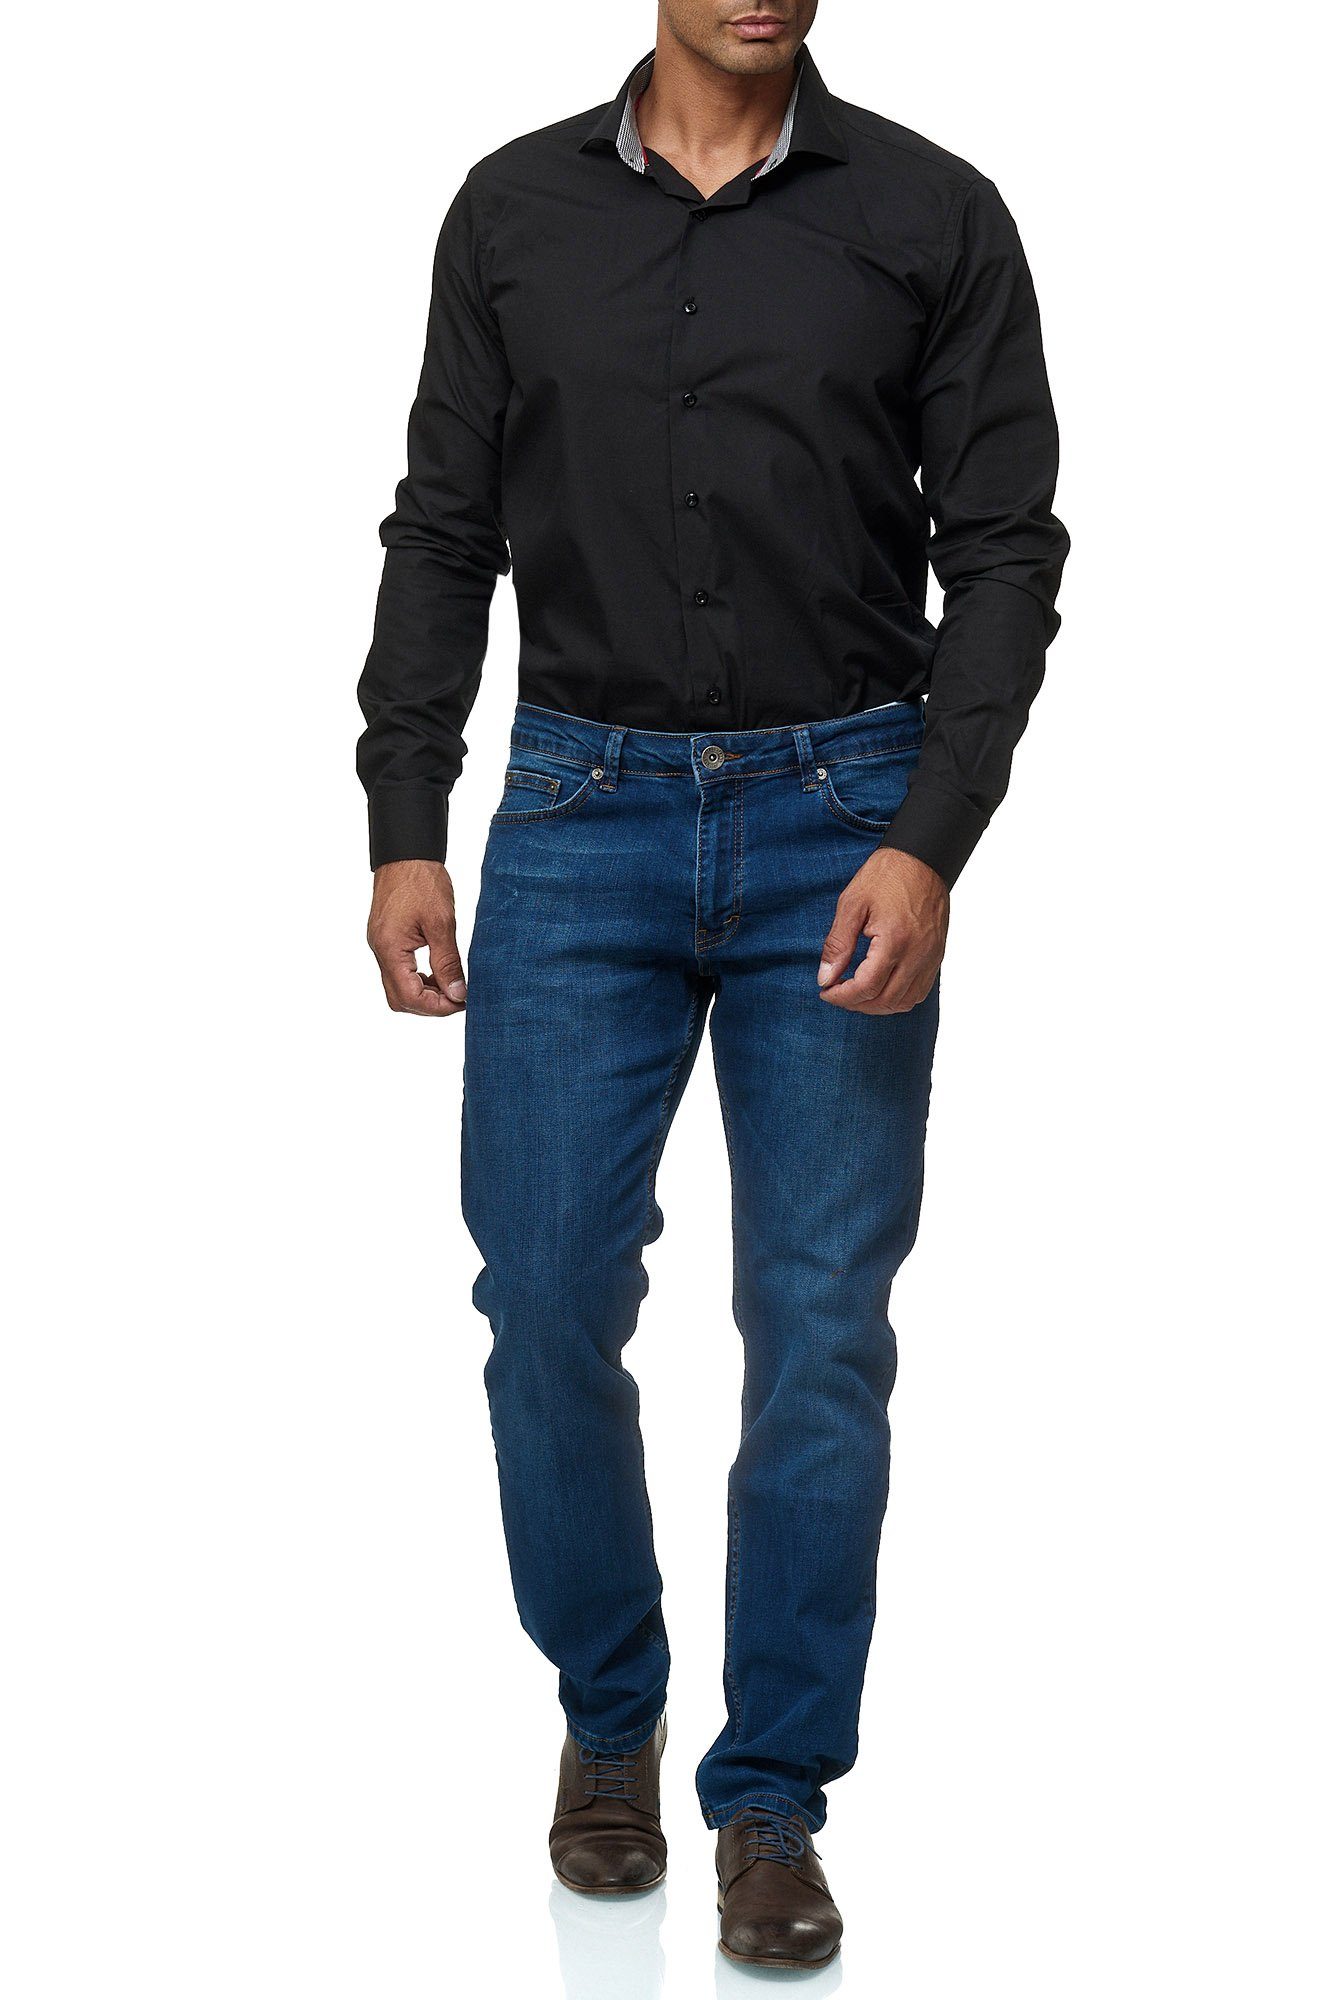 JEEL Regular-fit-Jeans 305 Jeans Herren Straight Cut 03-Blau Design 5-Pocket